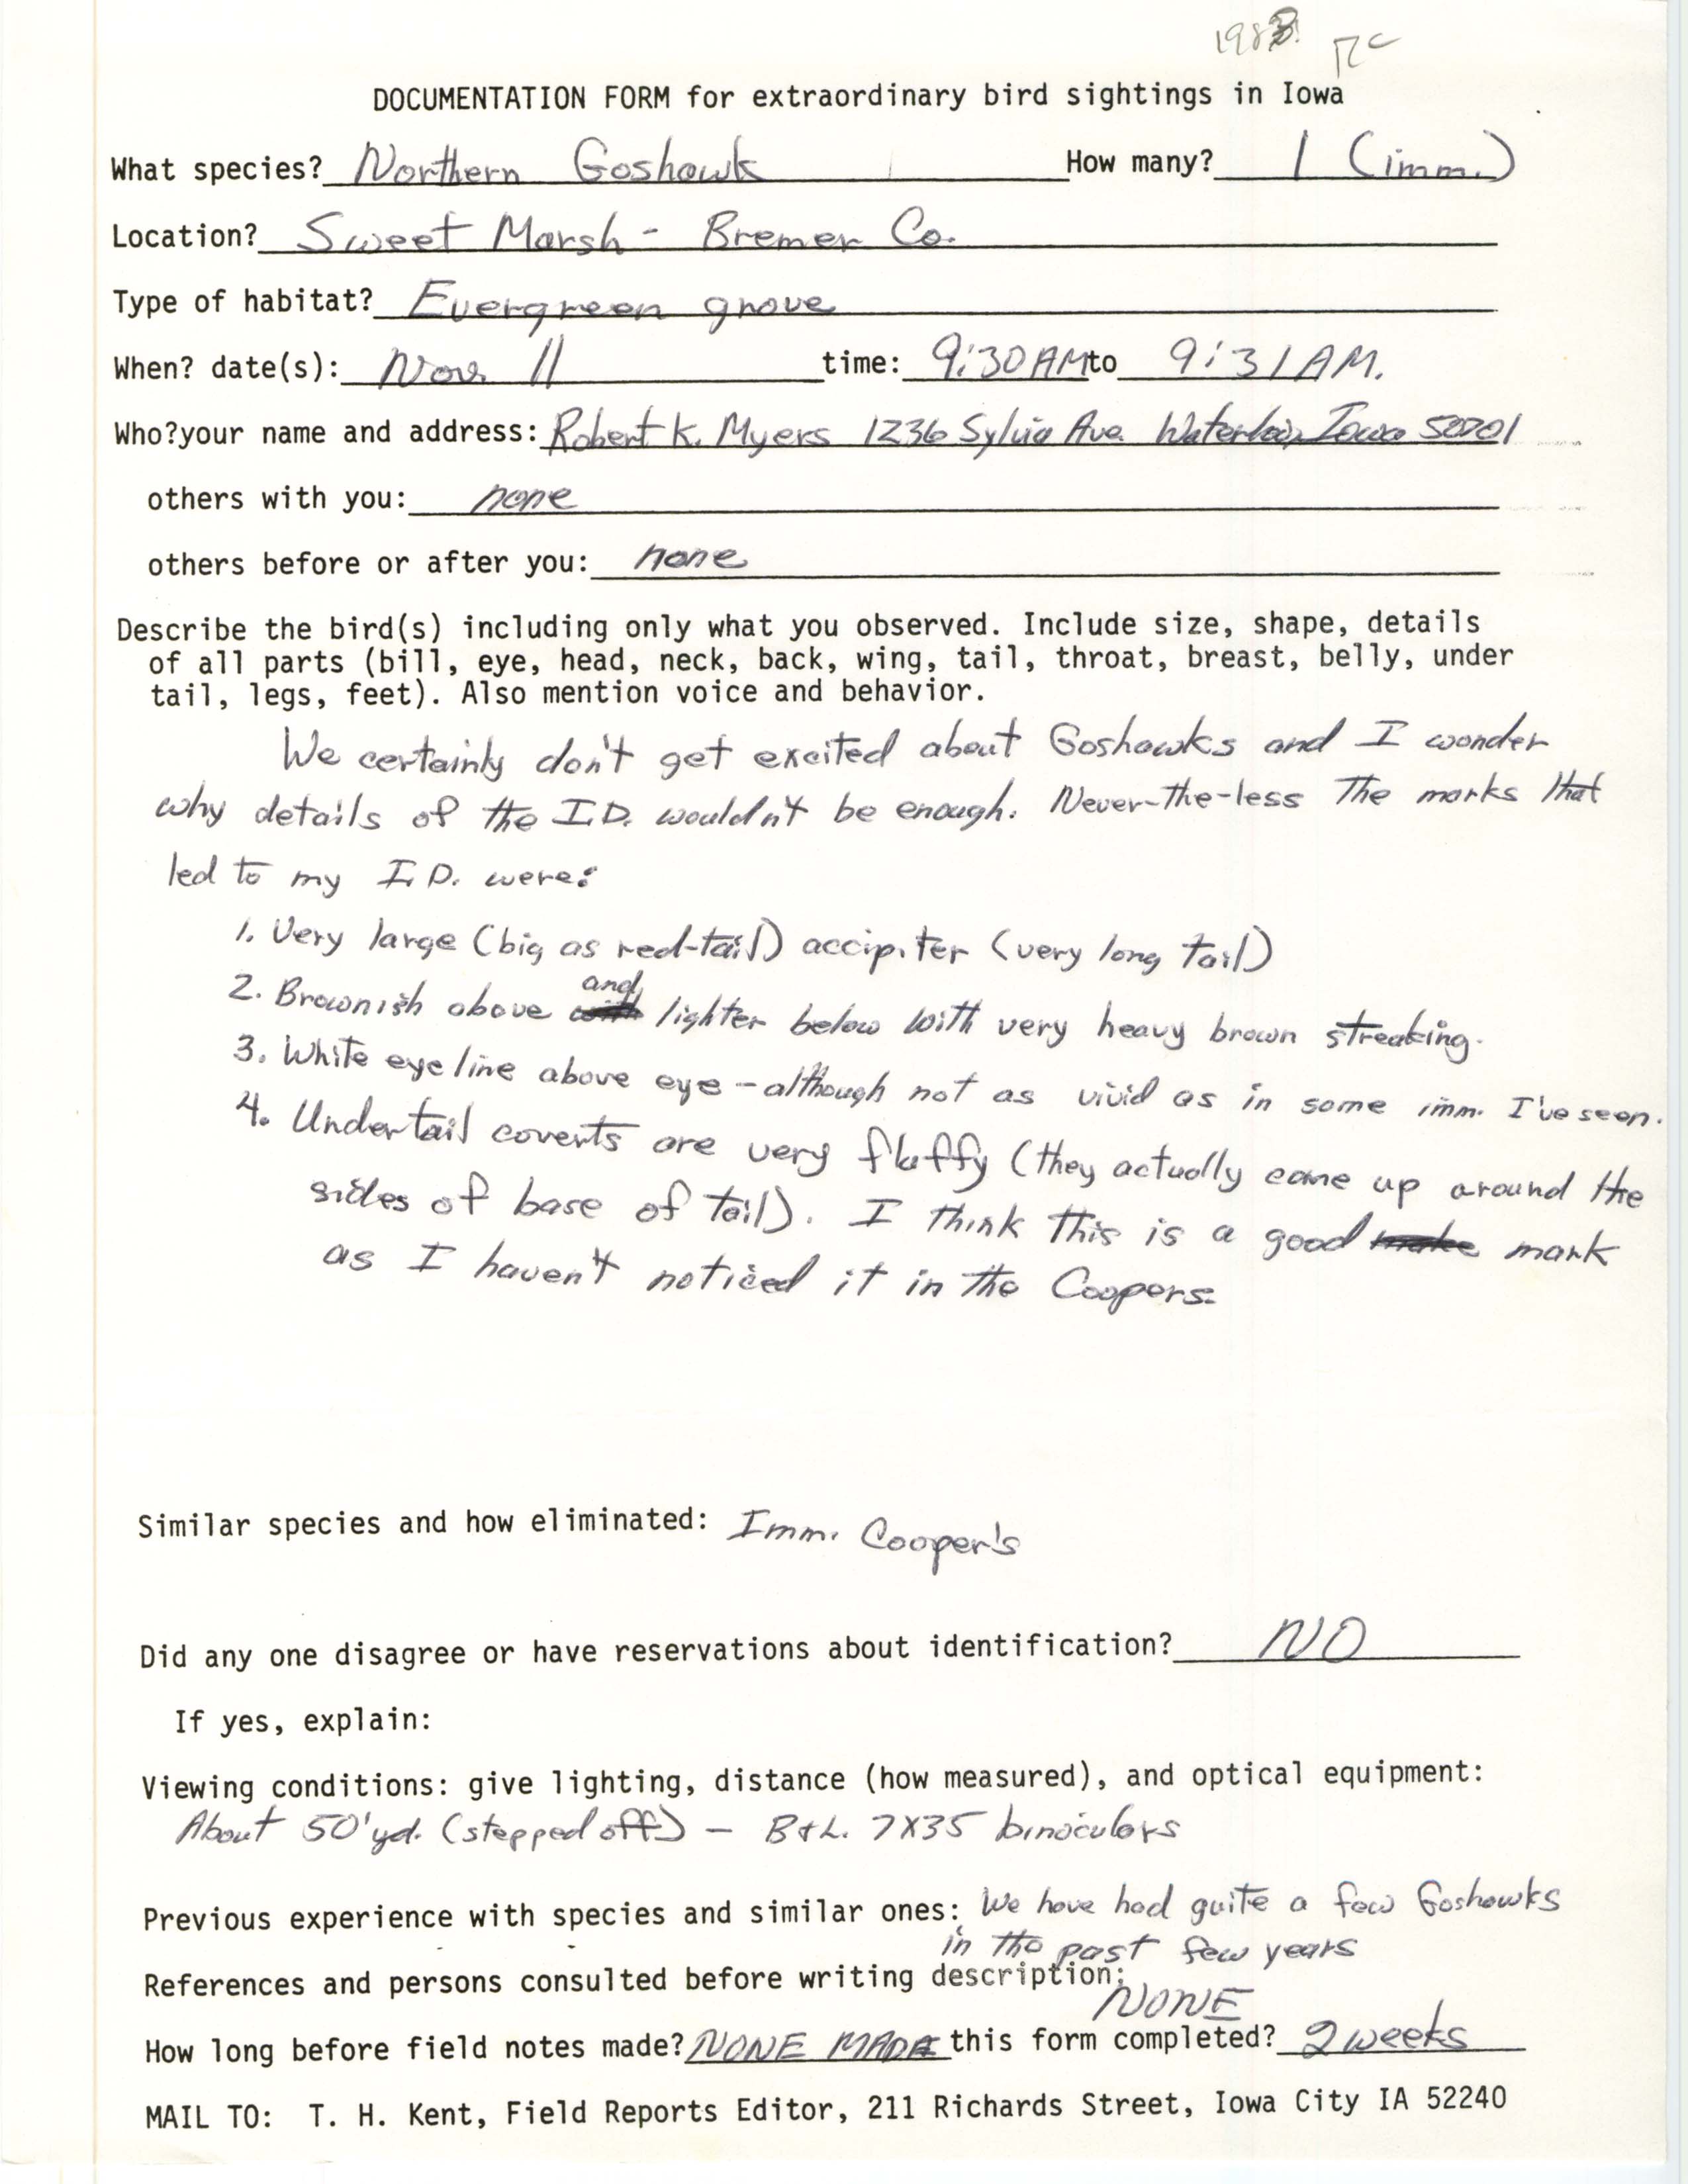 Rare bird documentation form for Northern Goshawk at Sweet Marsh, 1983